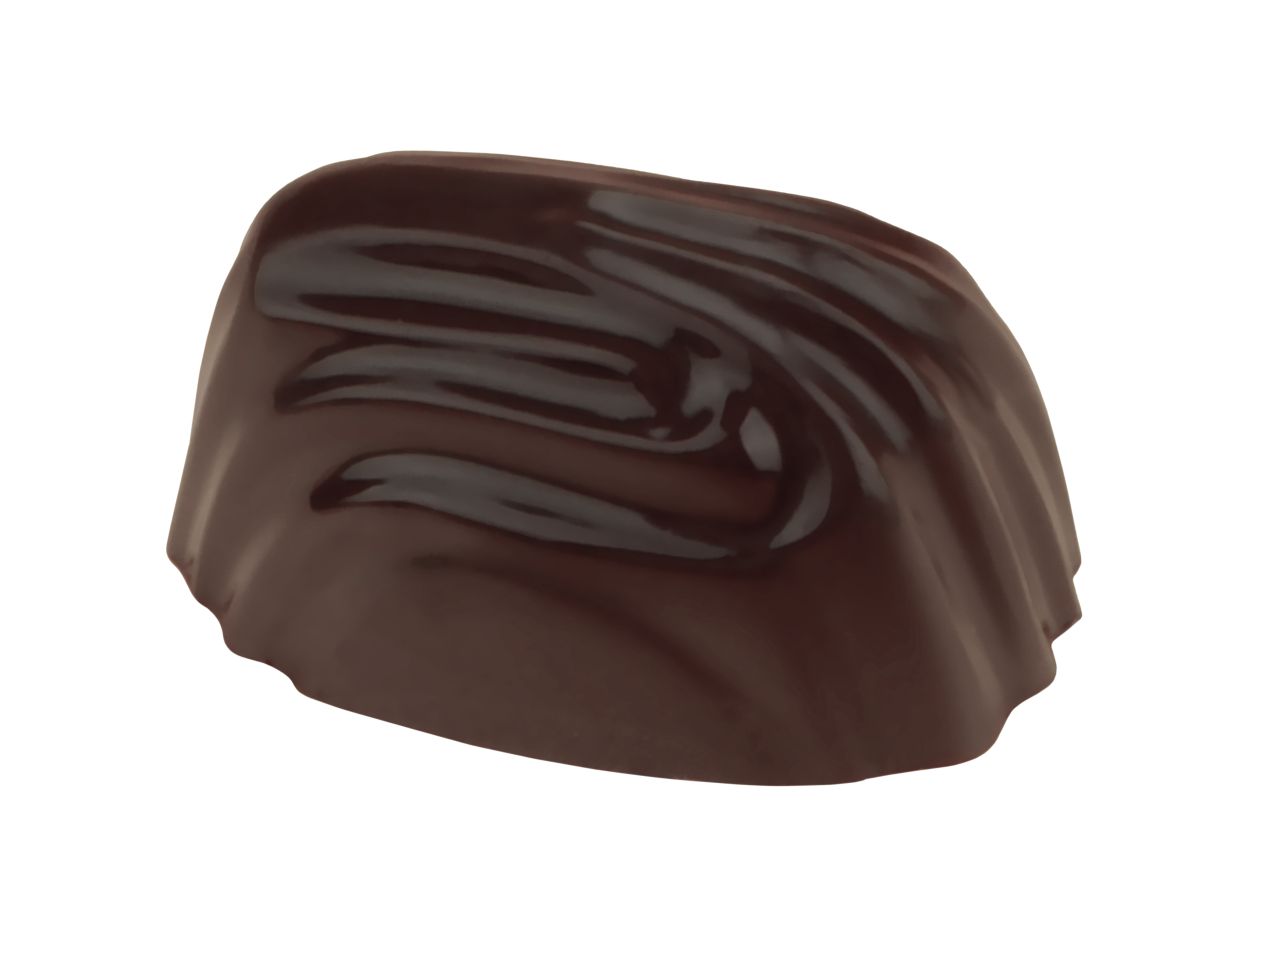 Schokoladenform: Noisette, Kunststoff, transparent, 21 Mulden à 32 x 20 x 20 mm